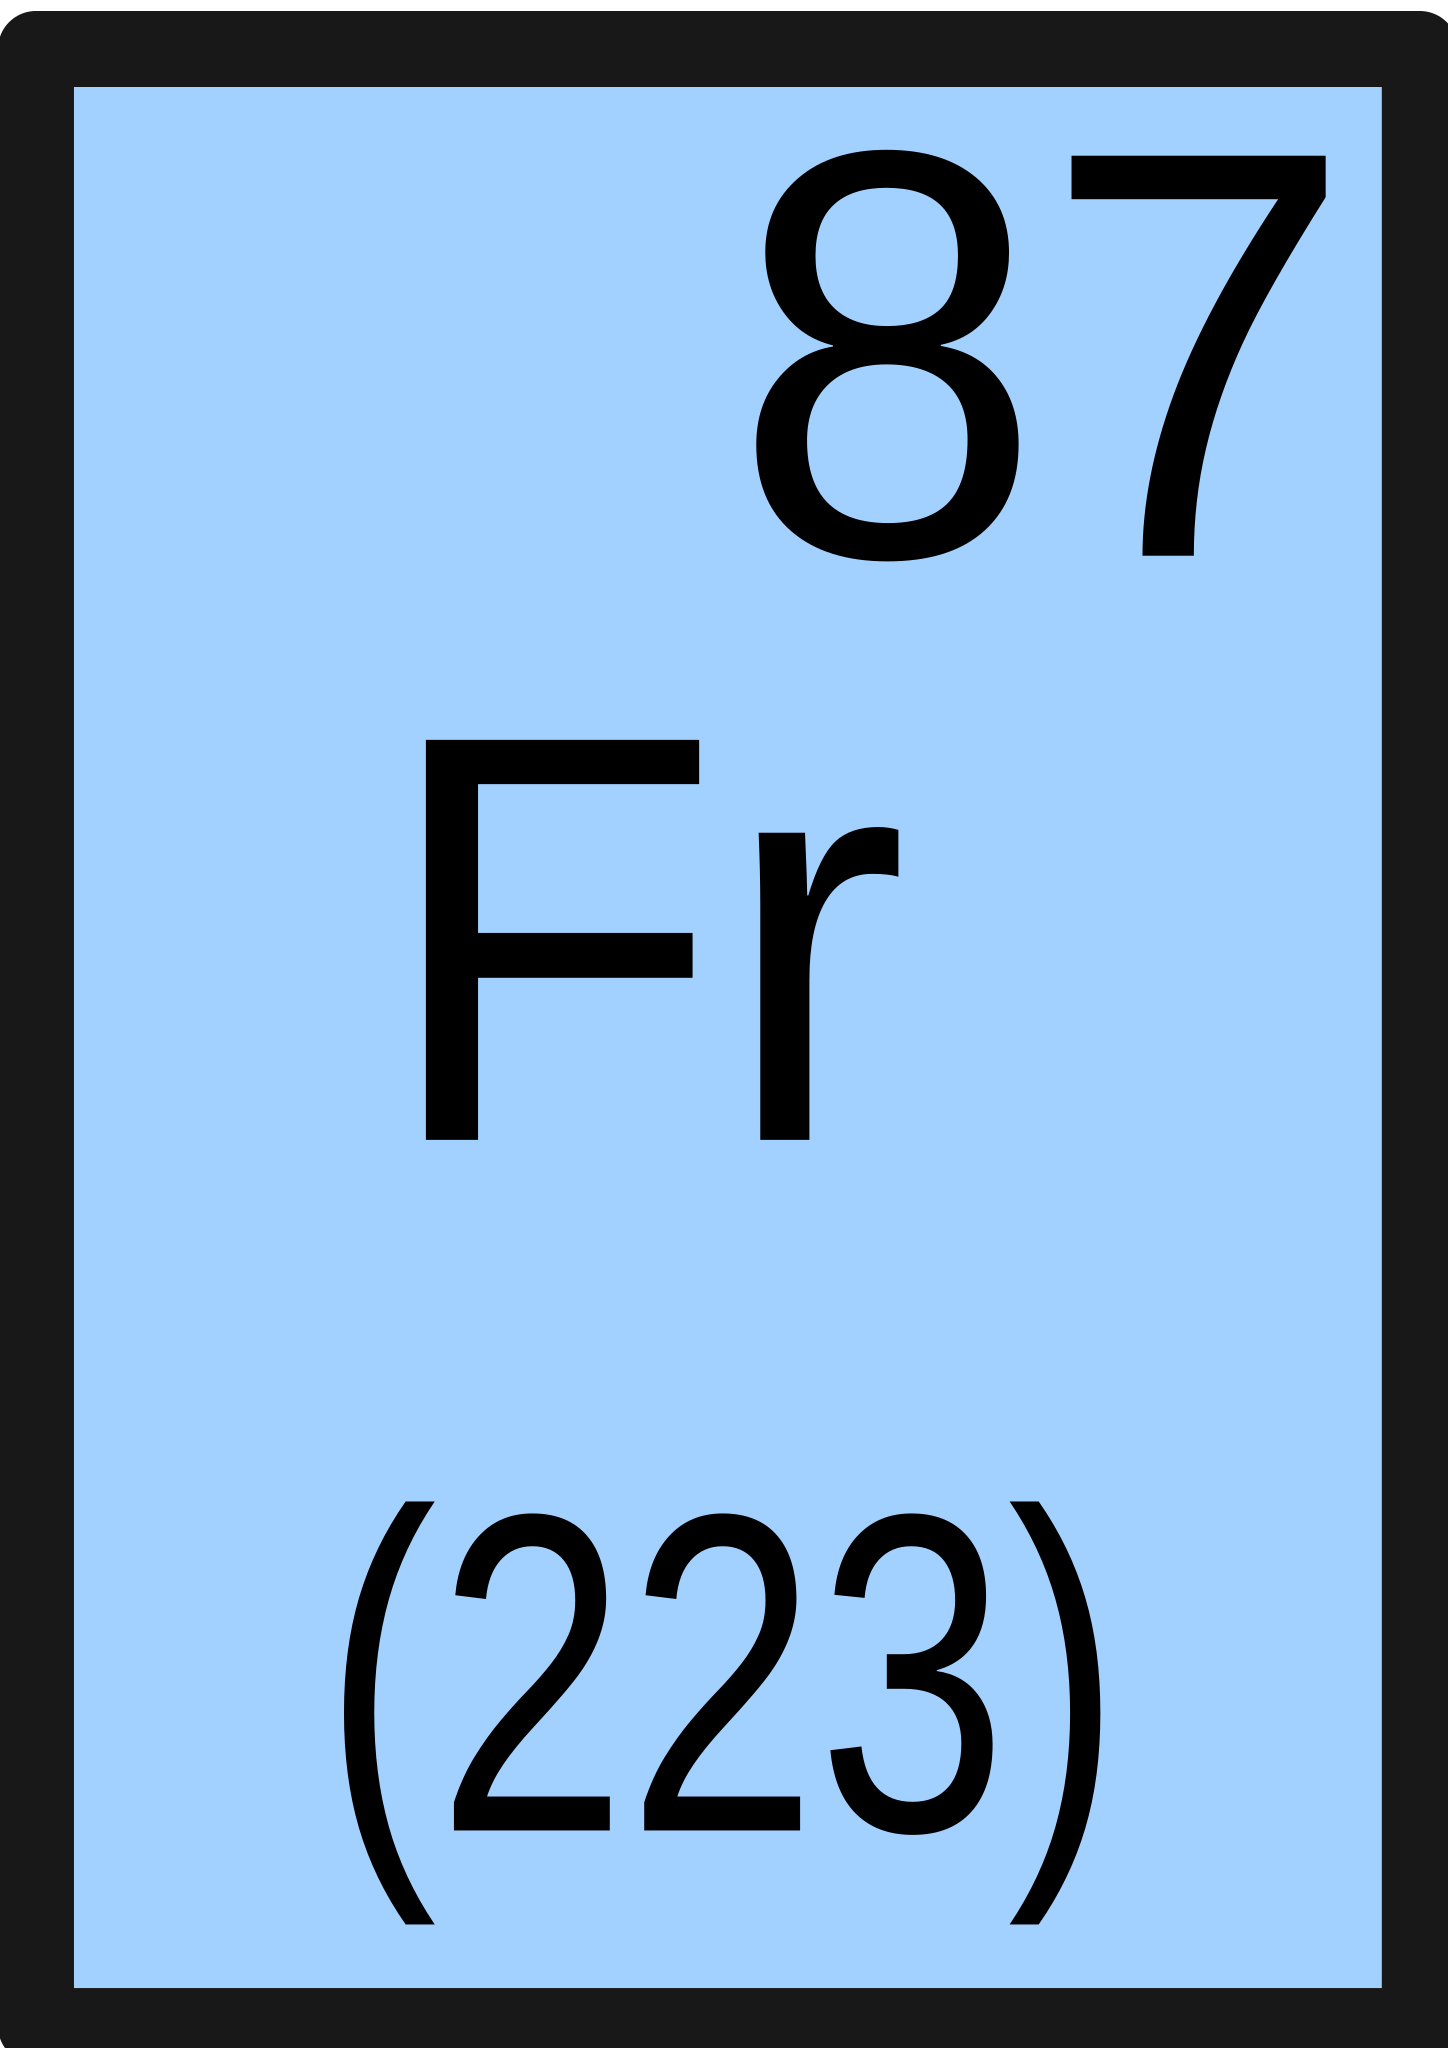 Fr какой элемент. Франций элемент. Франции химический элемент. Франций радиоактивный элемент. Хим элемент франций.